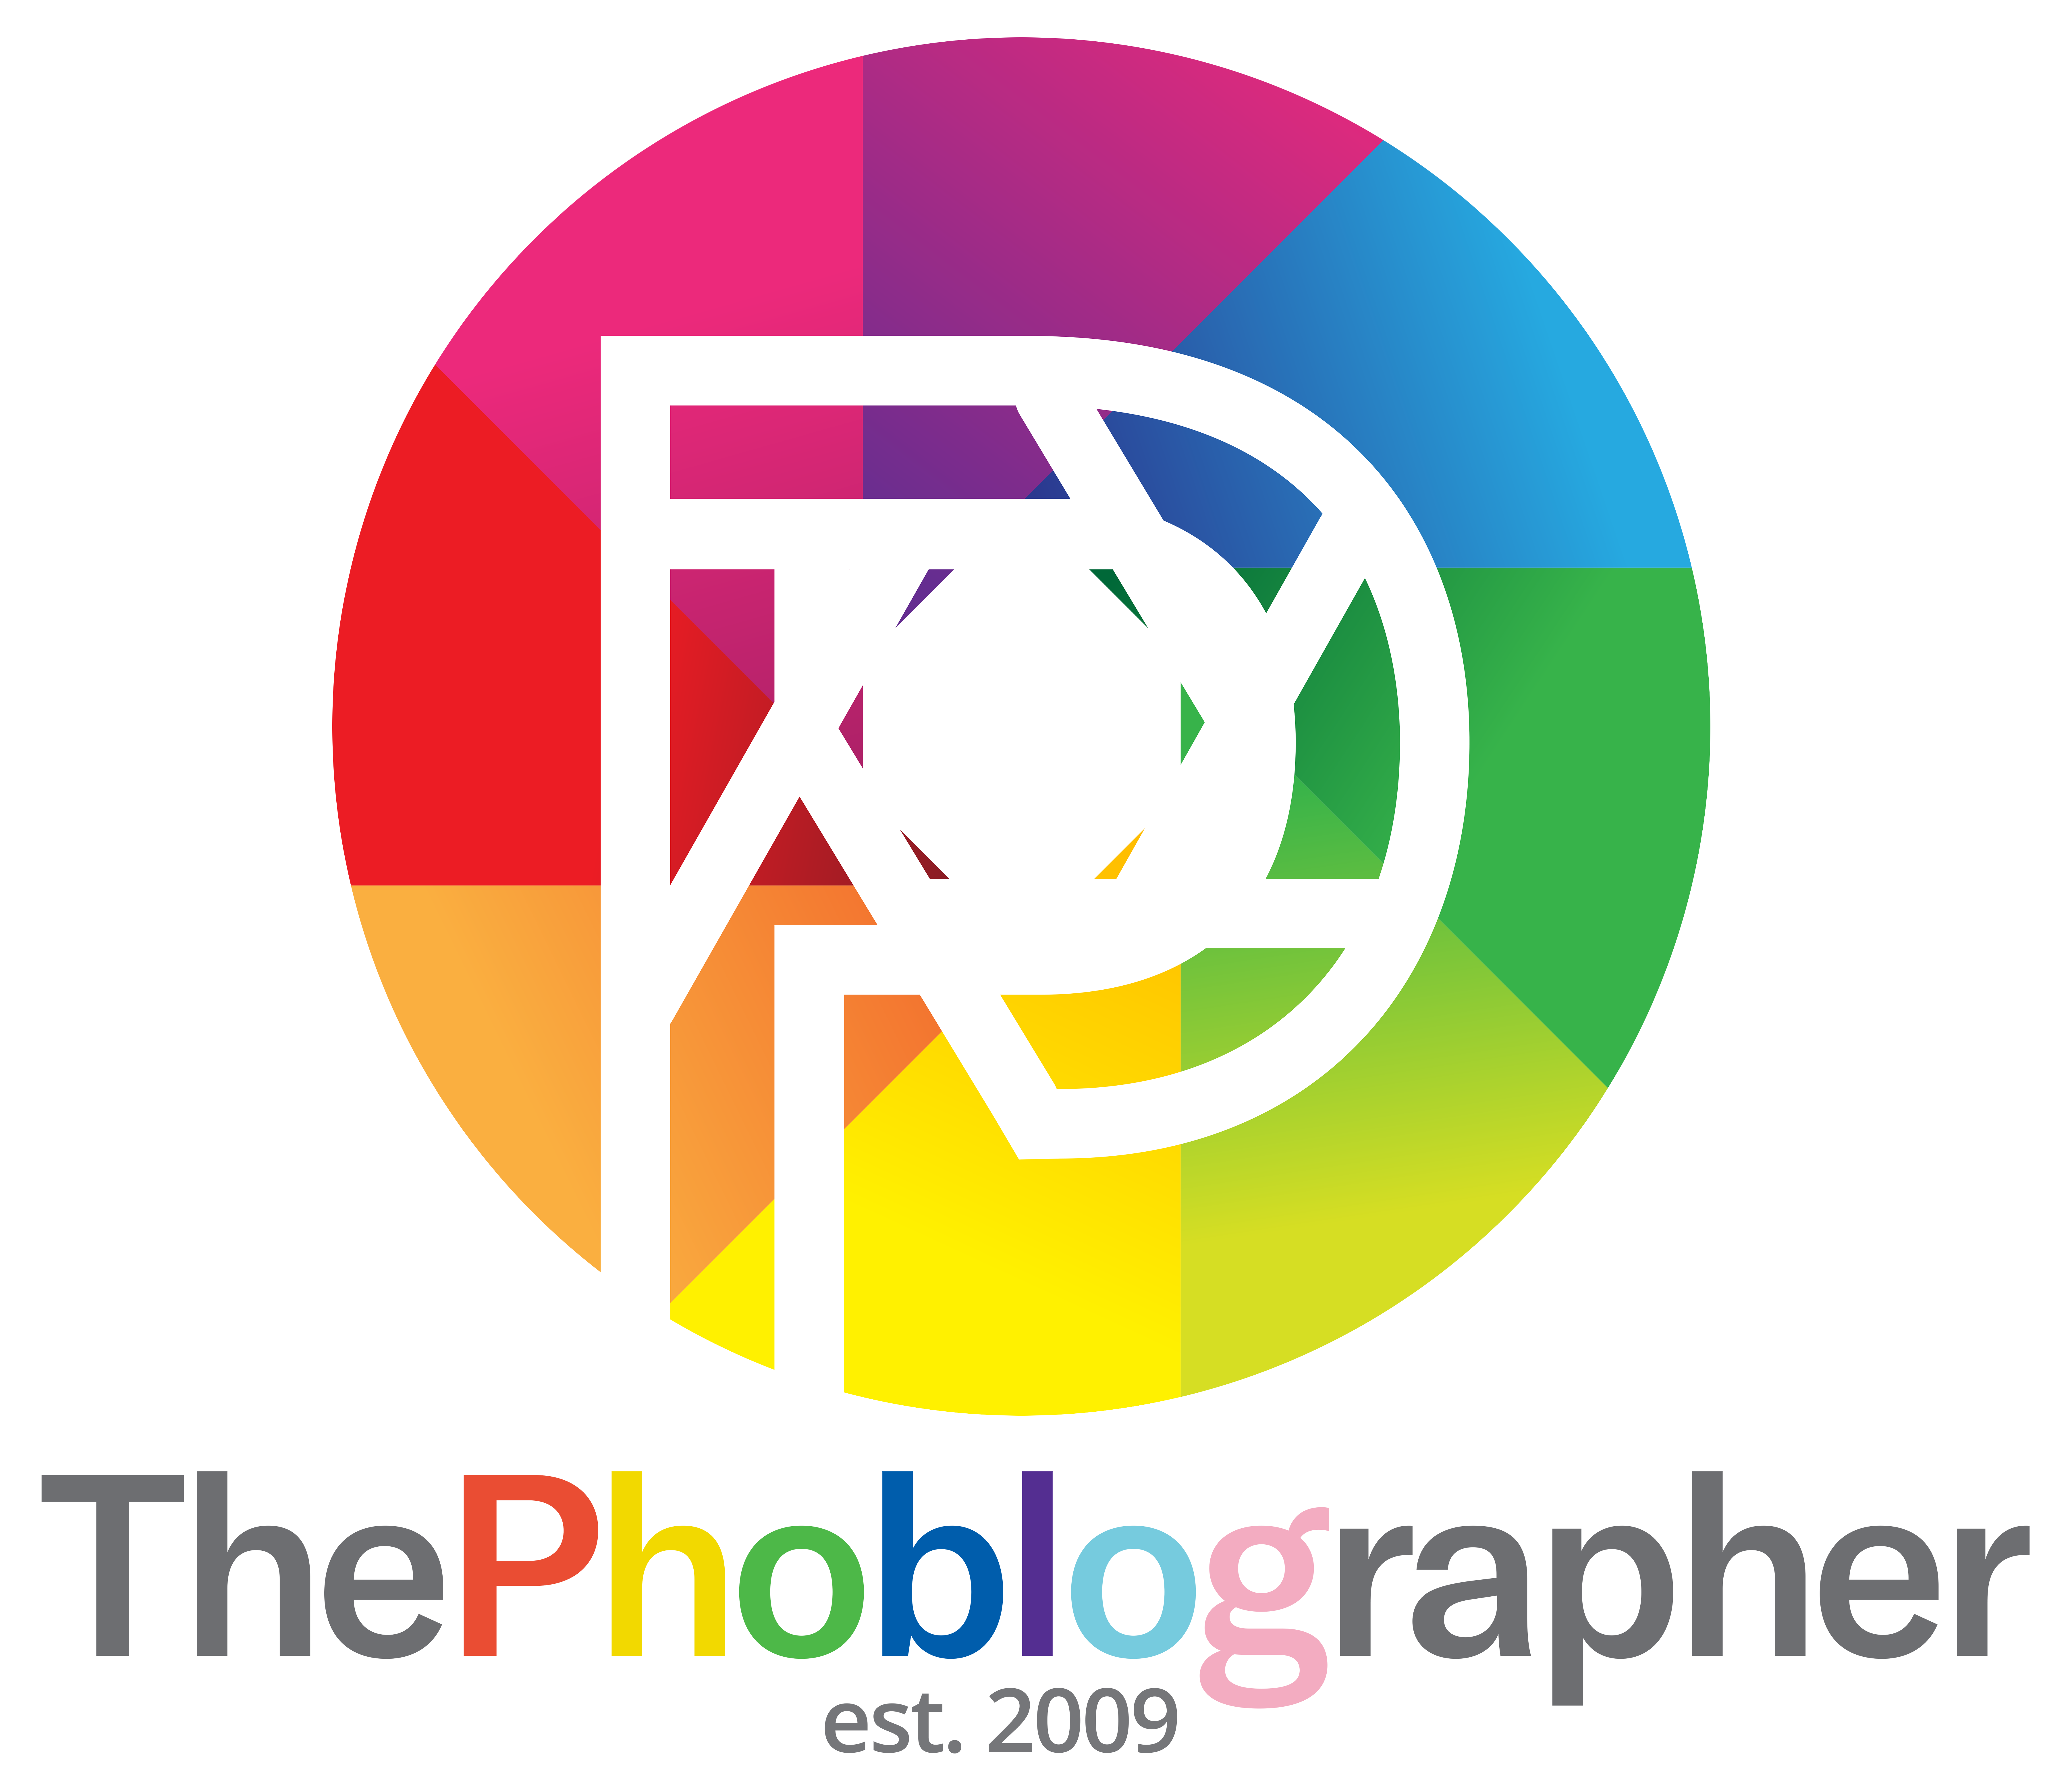 Phoblographer inclusive logo square sort of